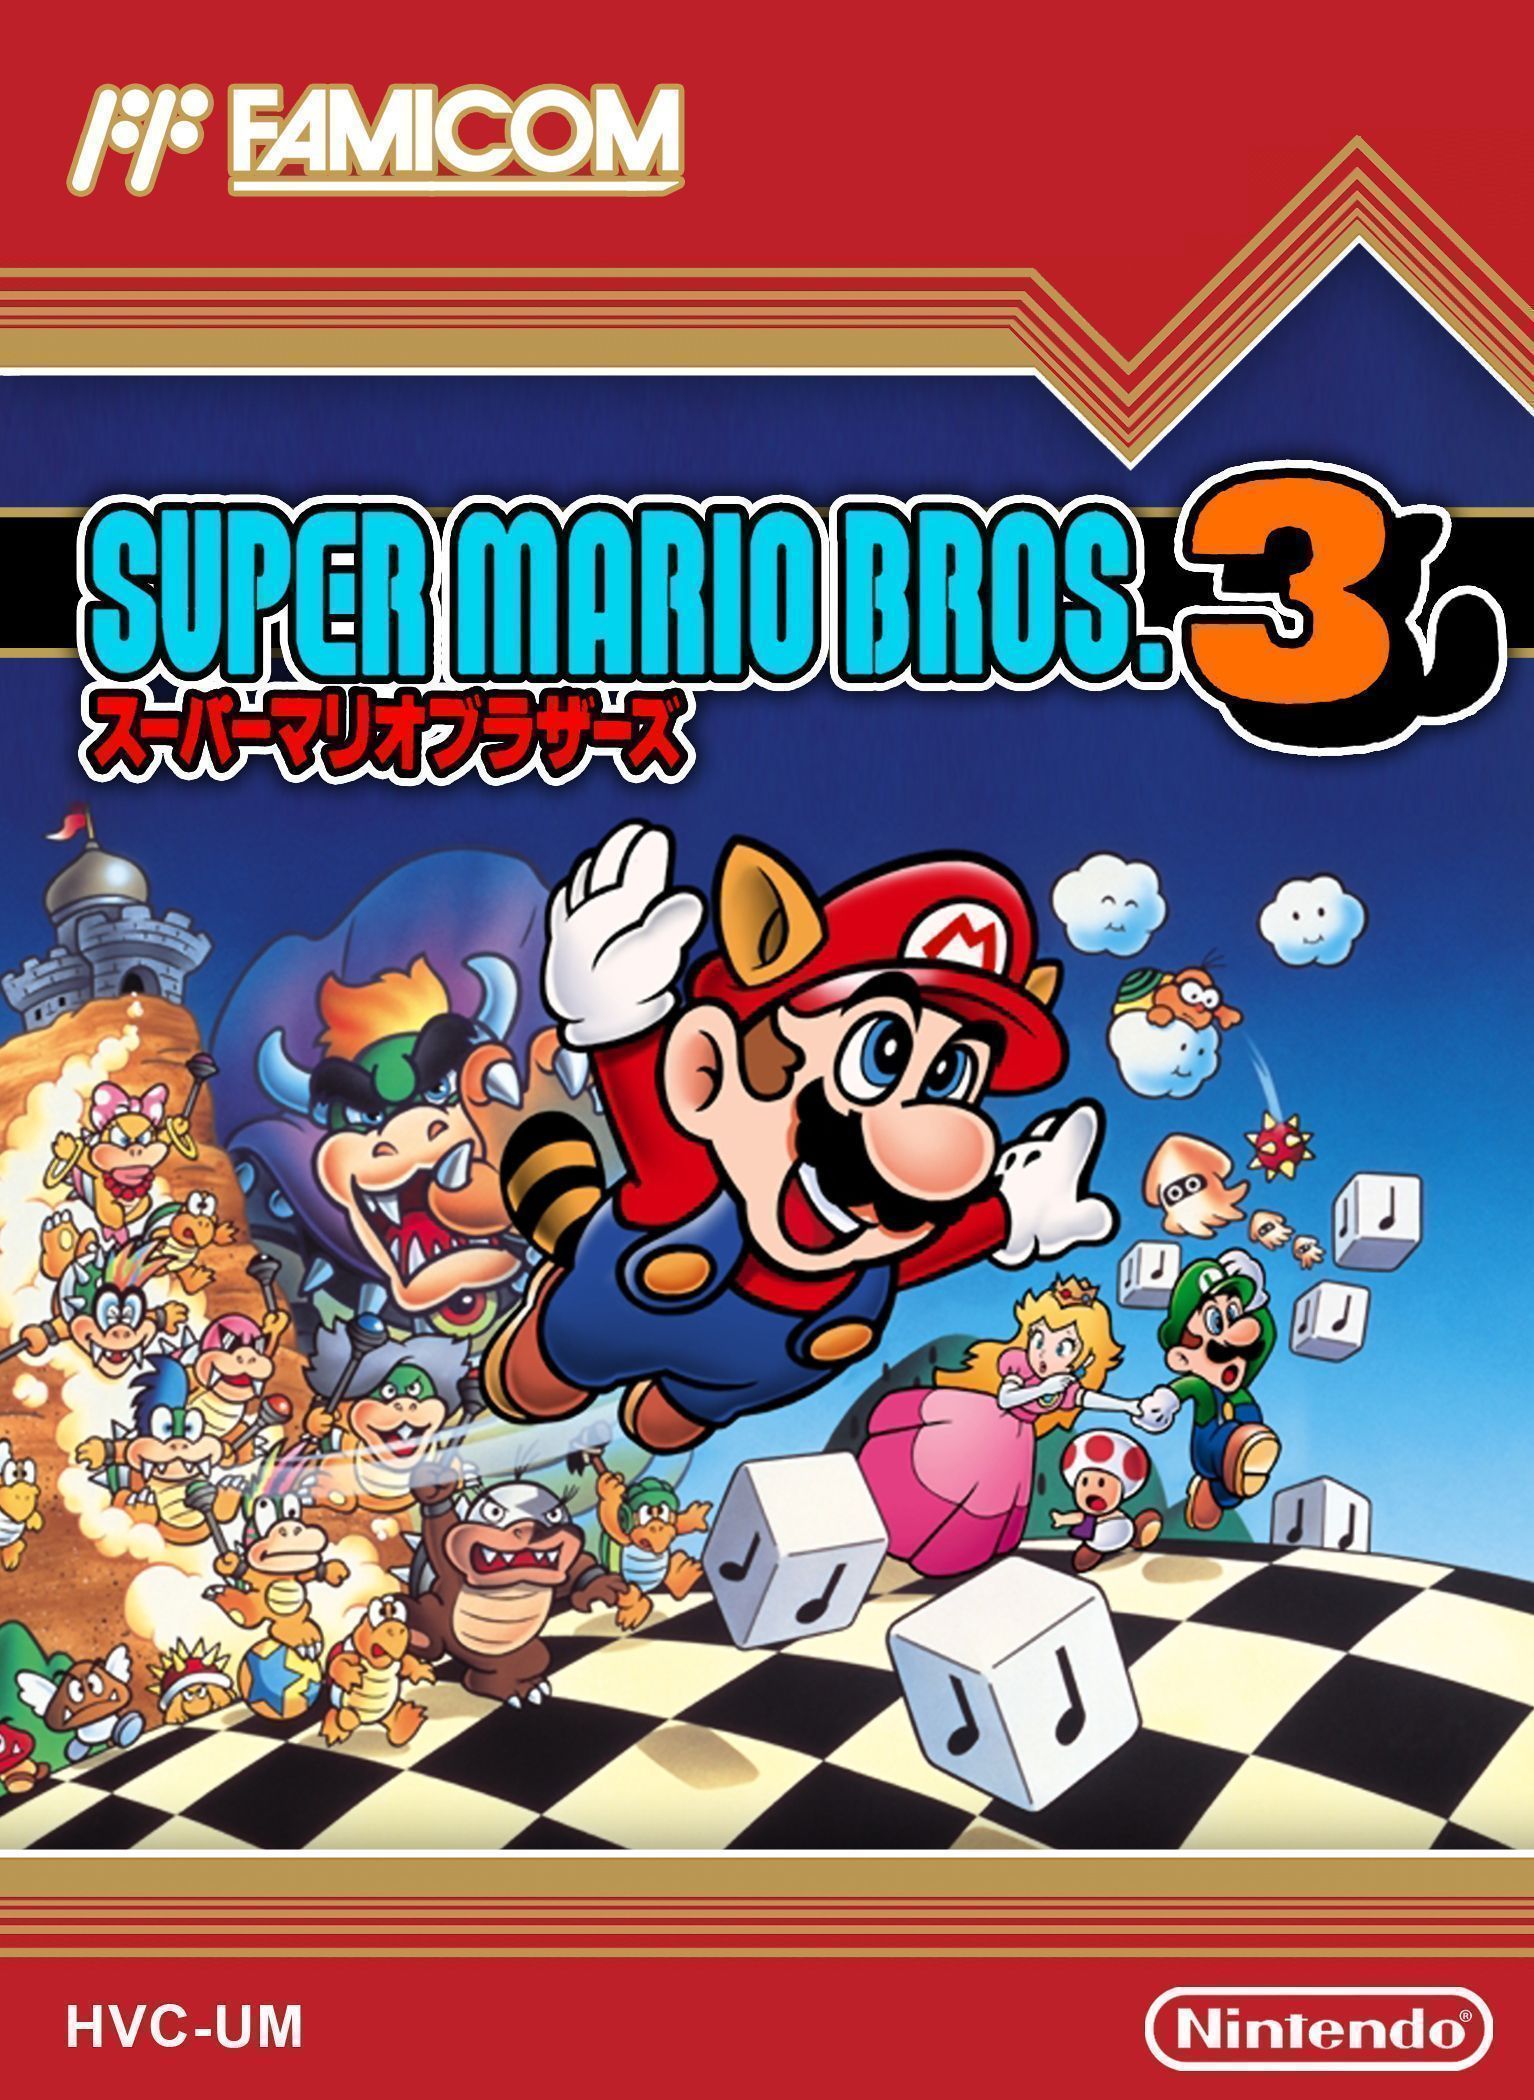 High Resolution Wallpaper | Super Mario Bros. 3 1534x2100 px